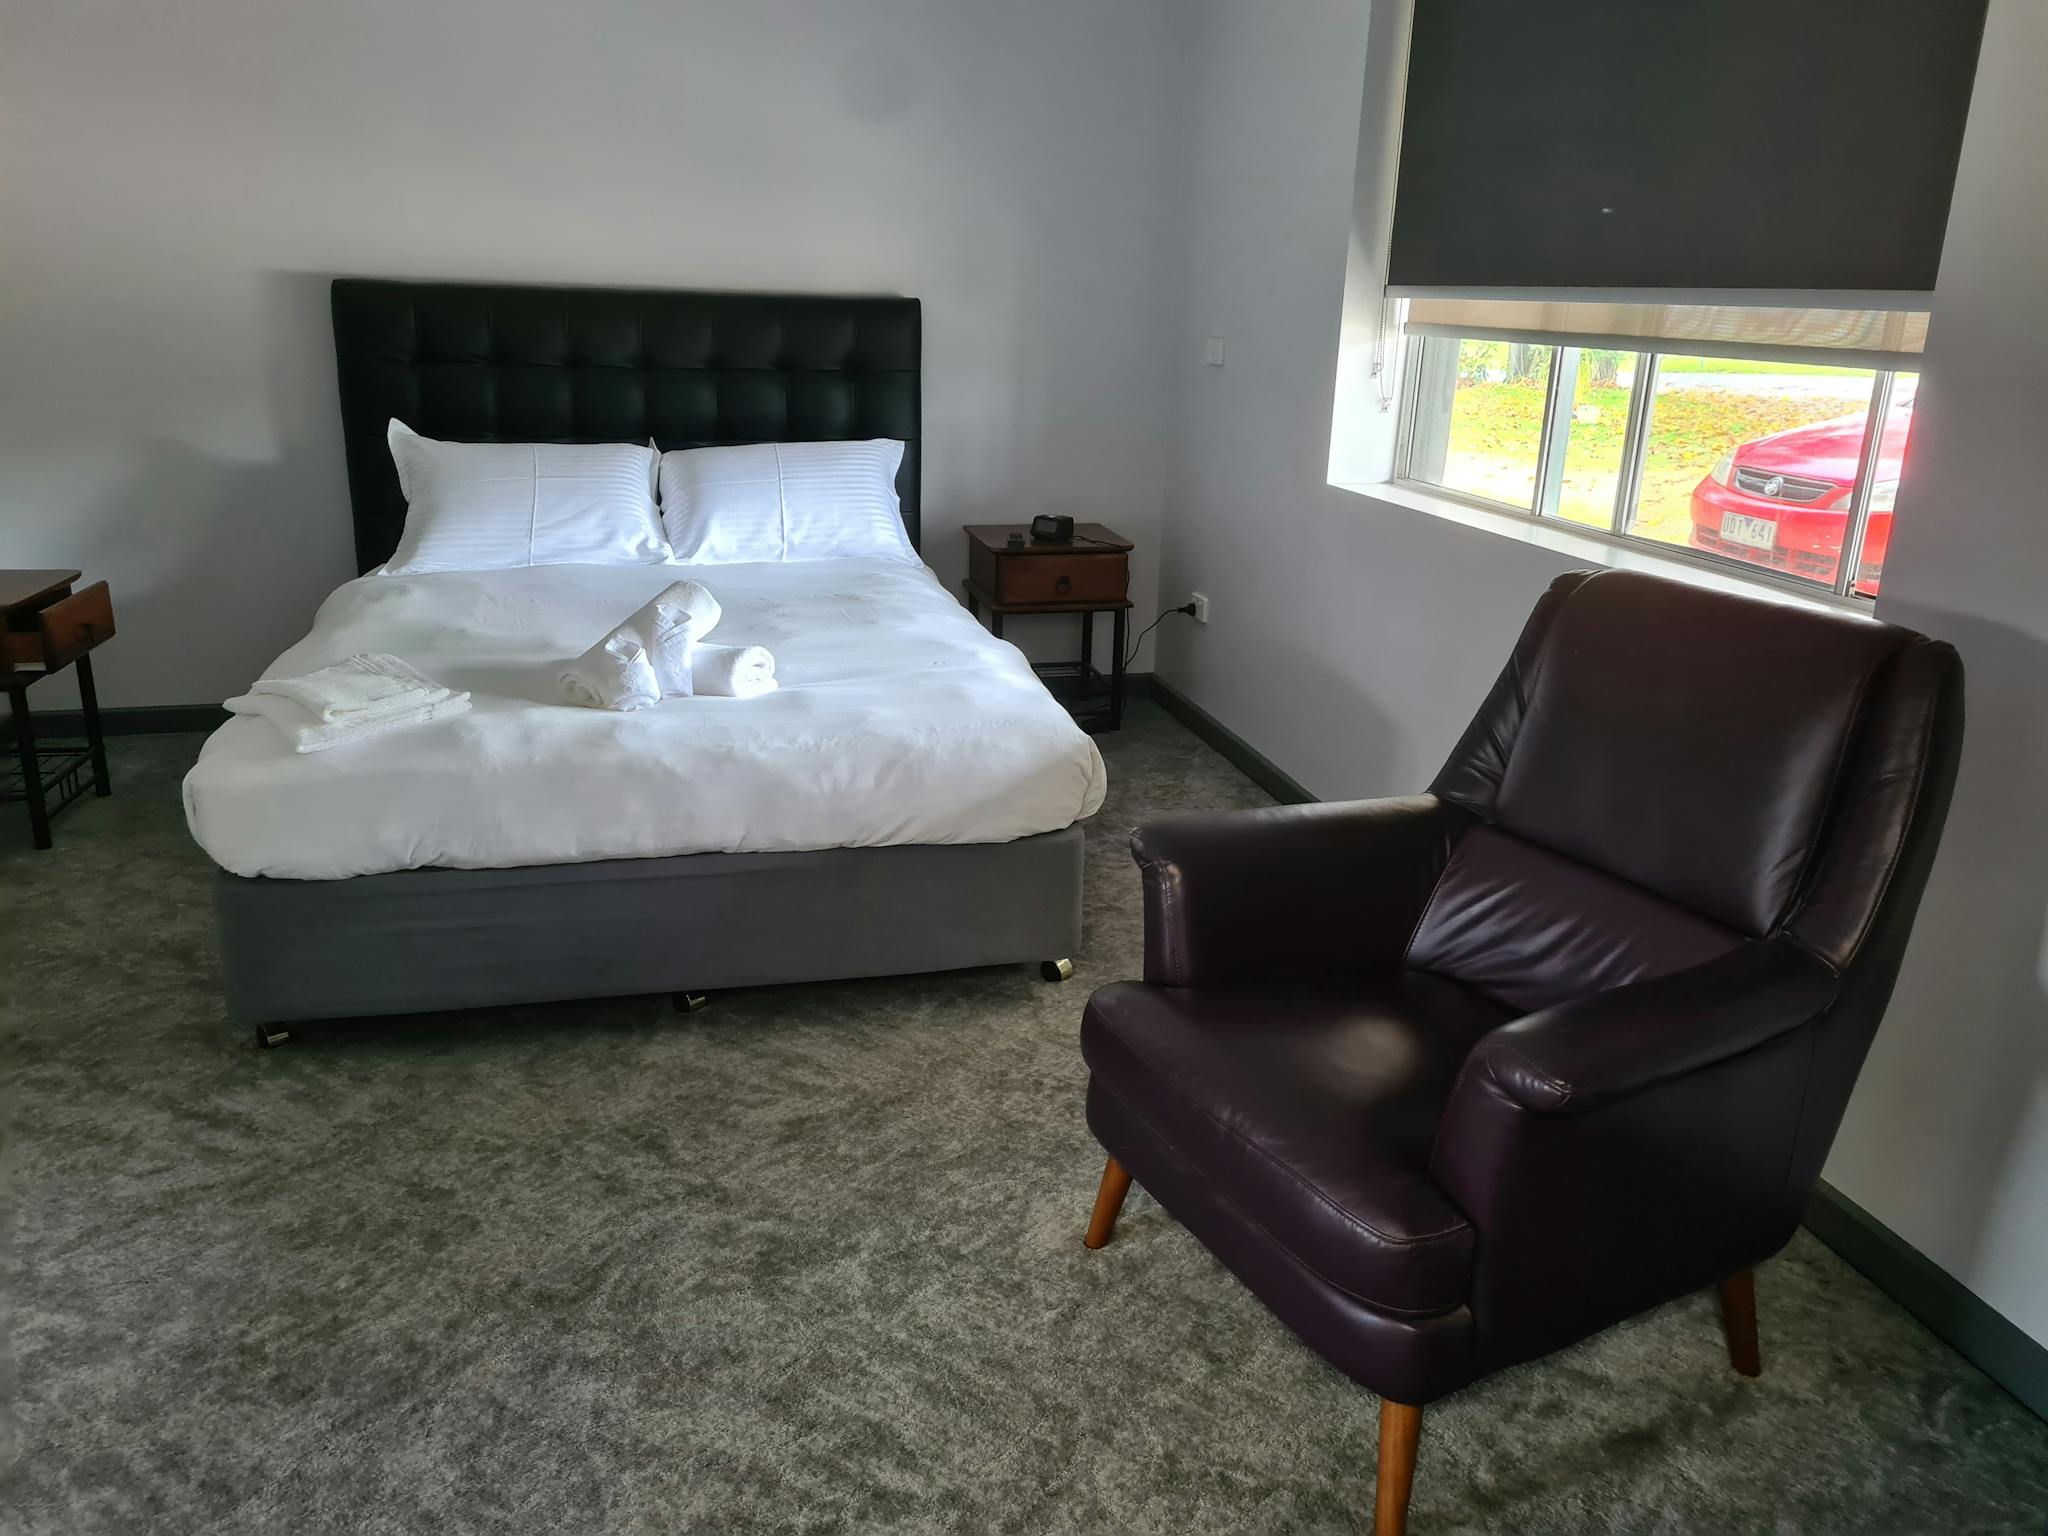 One bedroom motel